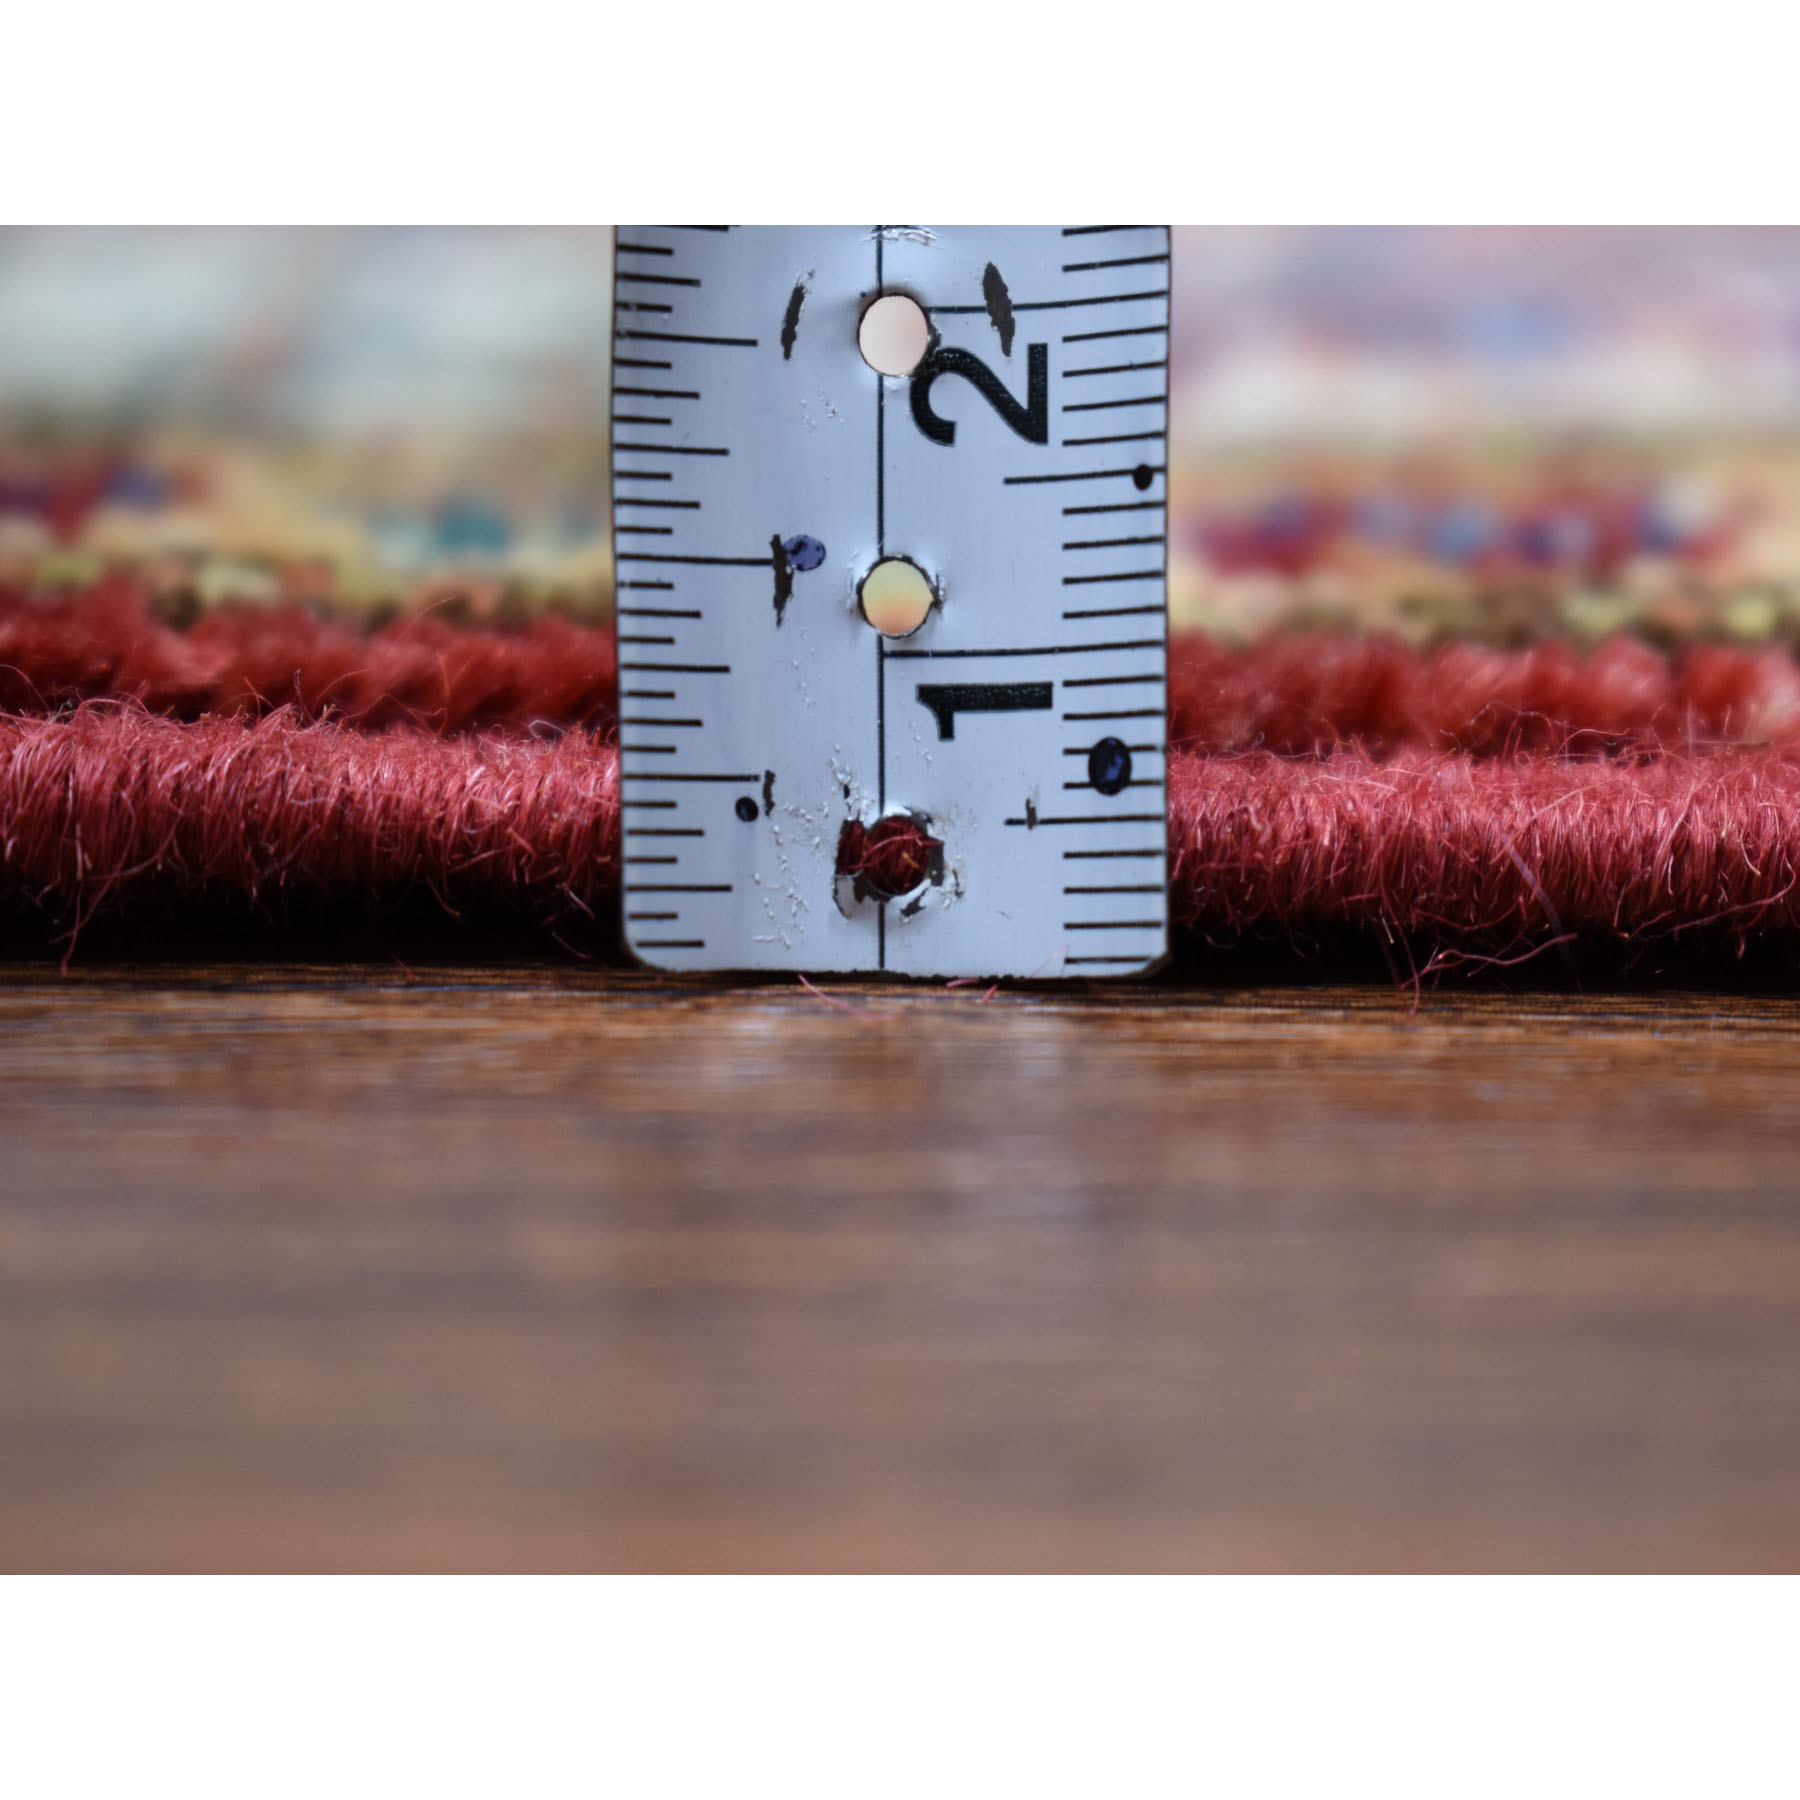 2'x3' Red Super Kazak Pure Wool Geometric Design Hand Woven Oriental Rug 